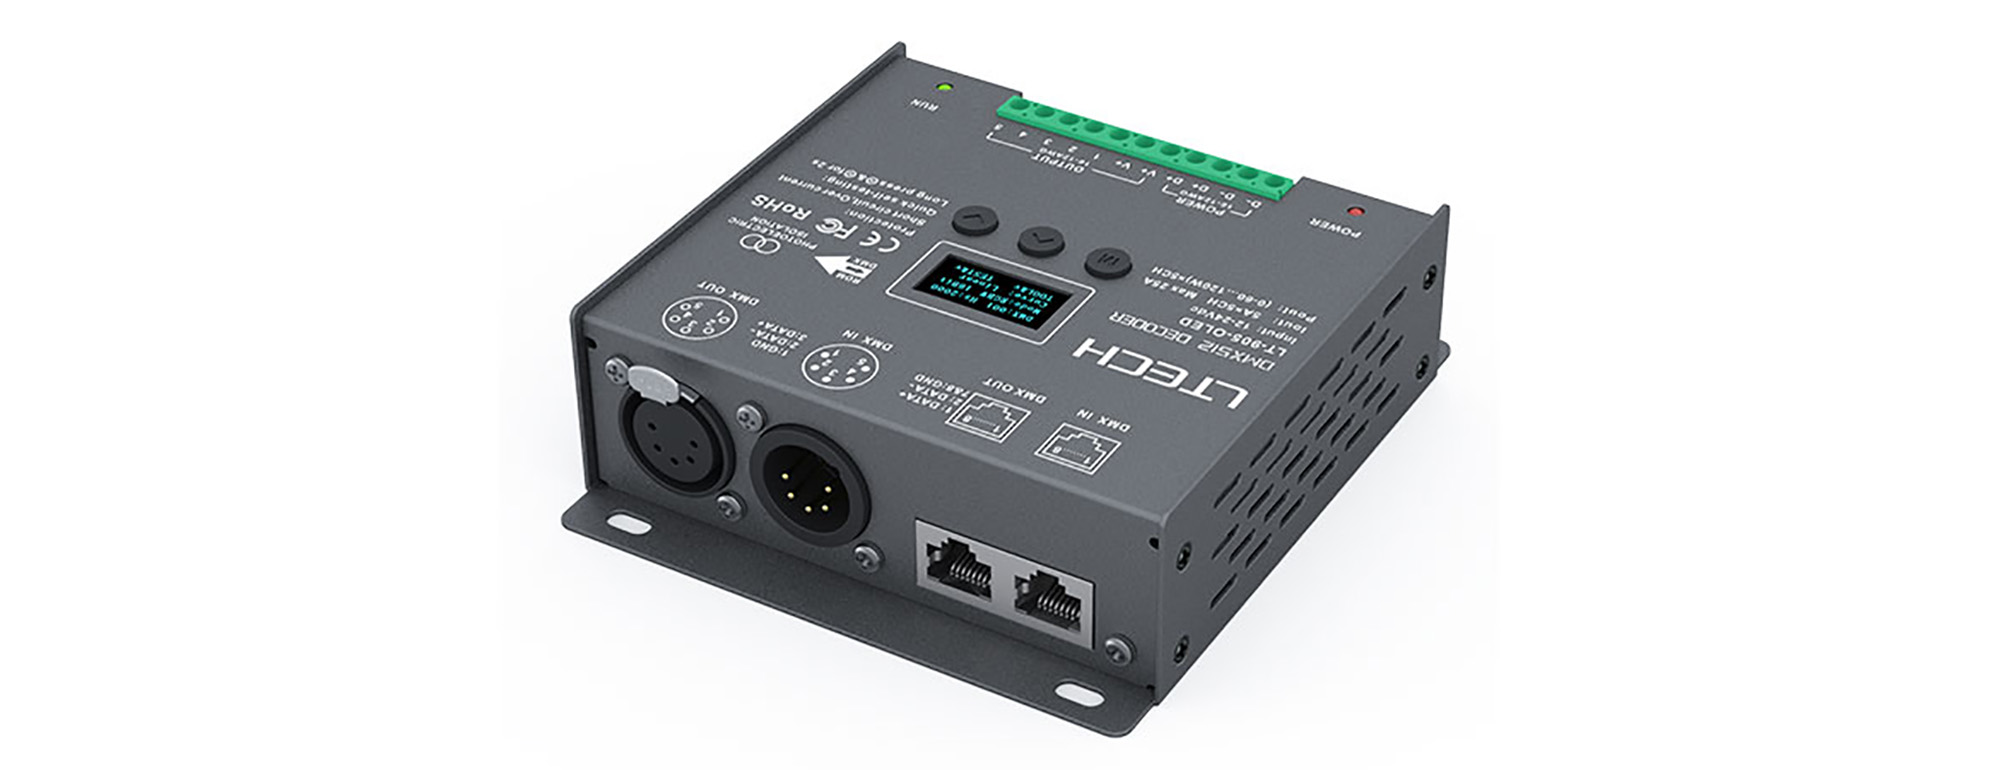 905-OLED  5Ch 5A CV DMX Decoder, 600W Max.Power, XLR-5 & RJ45 Port, Self testing, DMX512/RDM I/P signal, IP20.